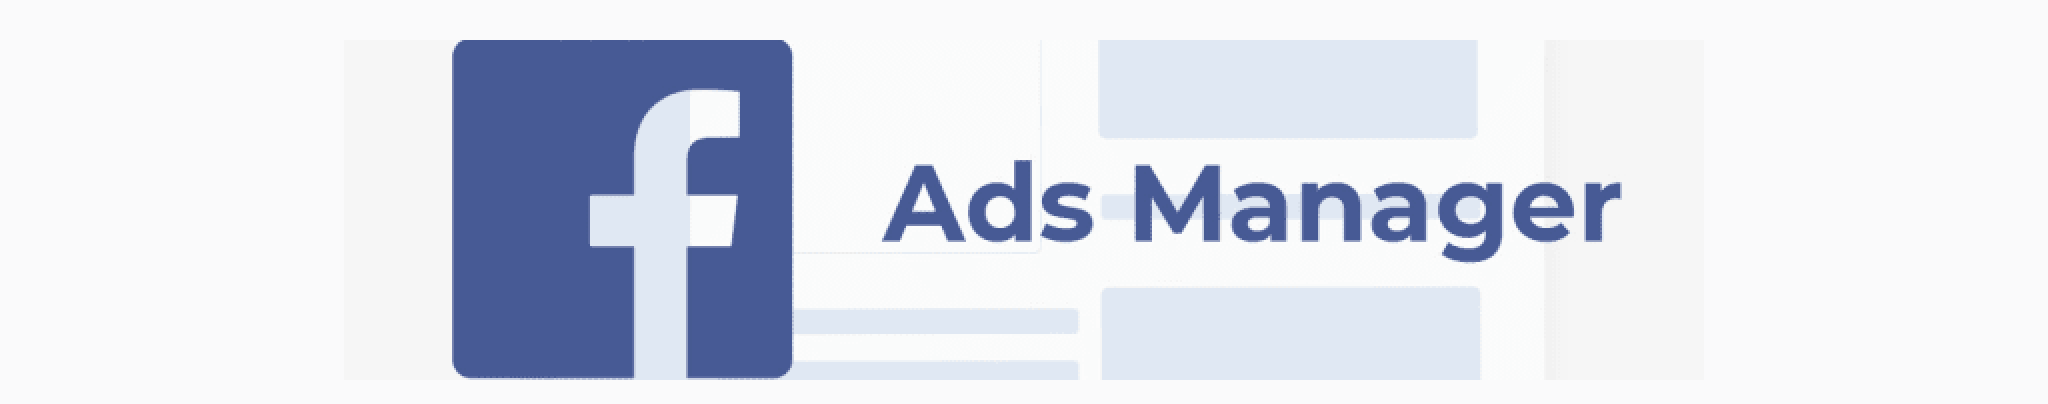 Top 10 Facebook Ads analytics tools - number 5